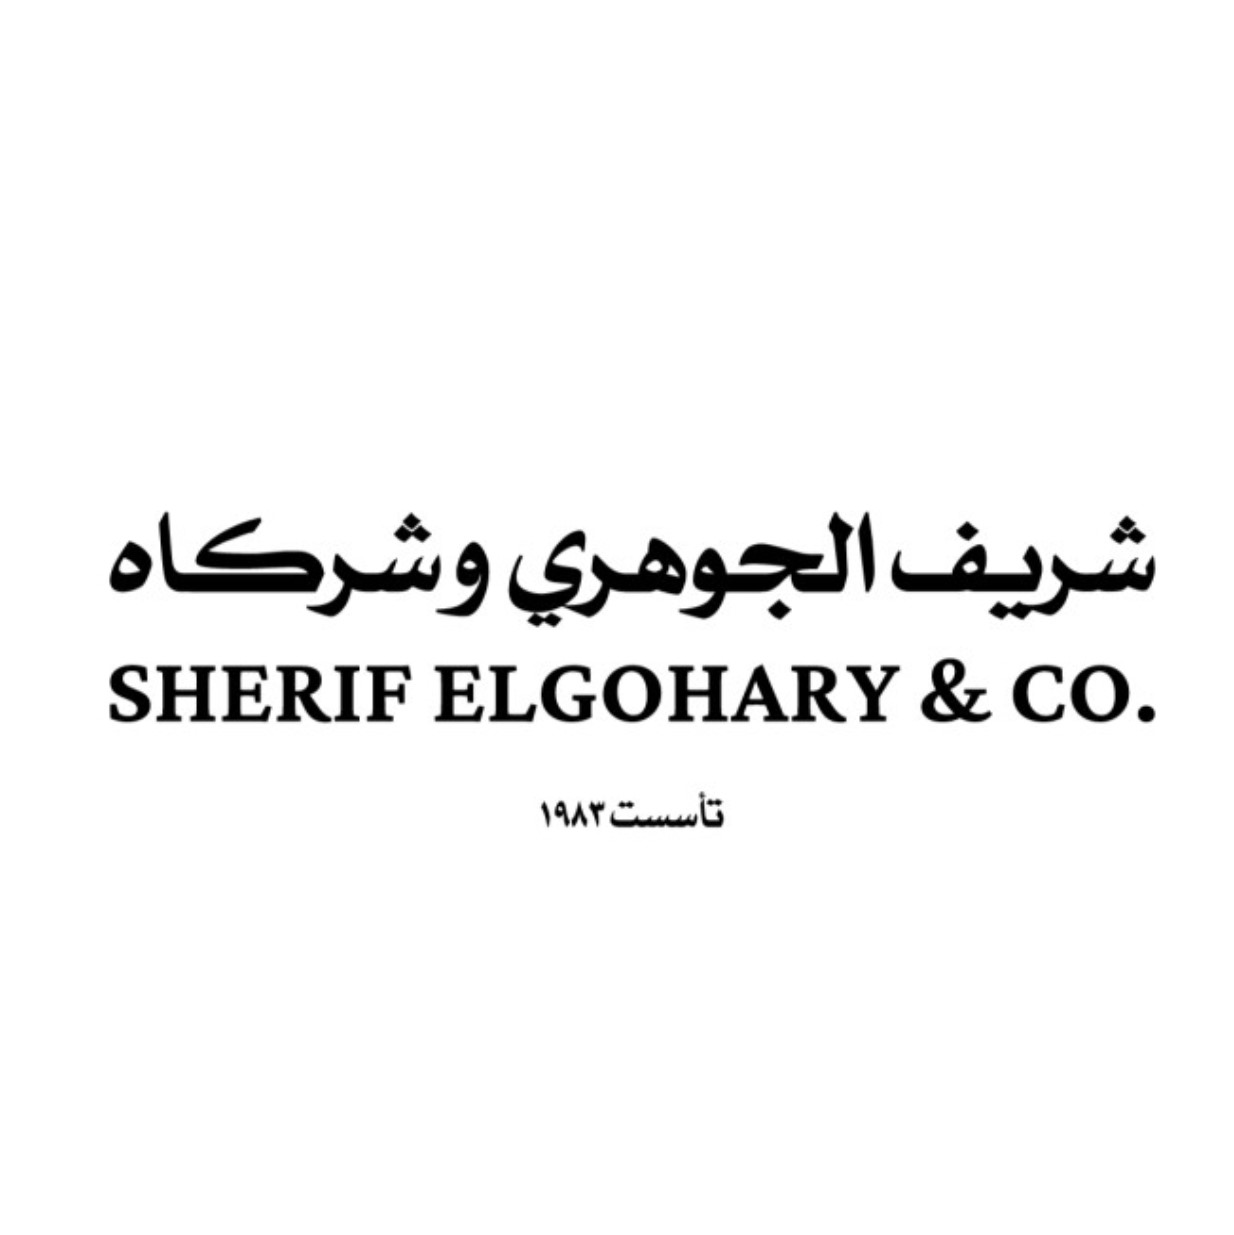 Sherif El gohary & Co.